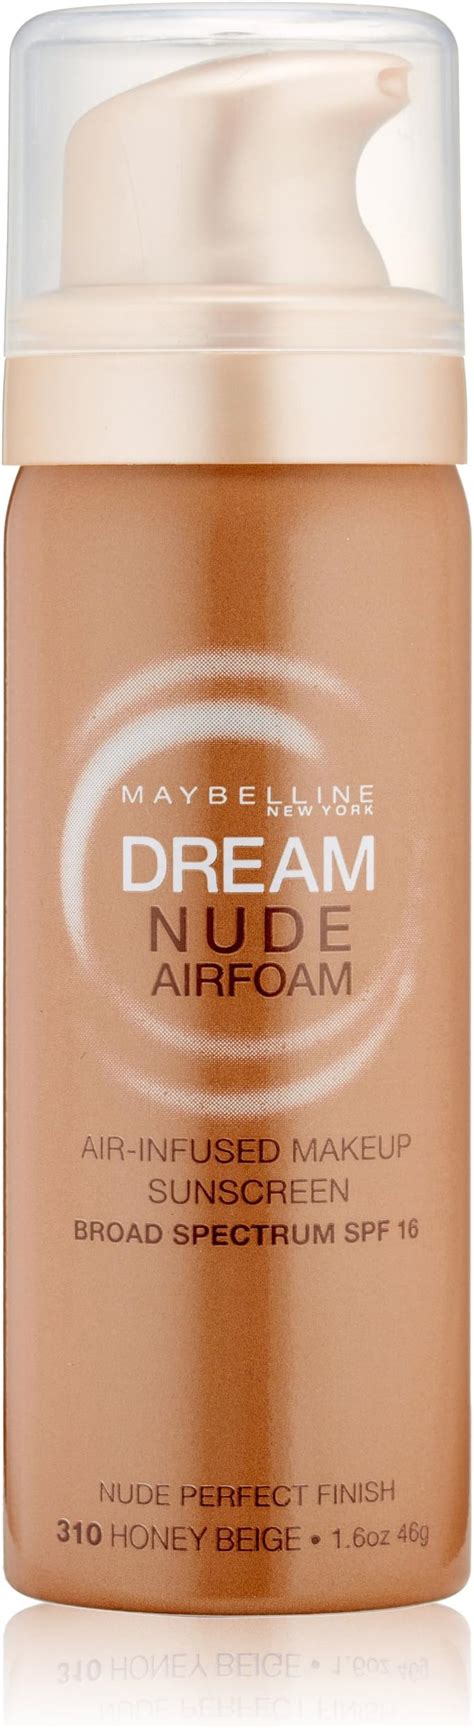 Maybelline New York Dream Nude Airfoam logo